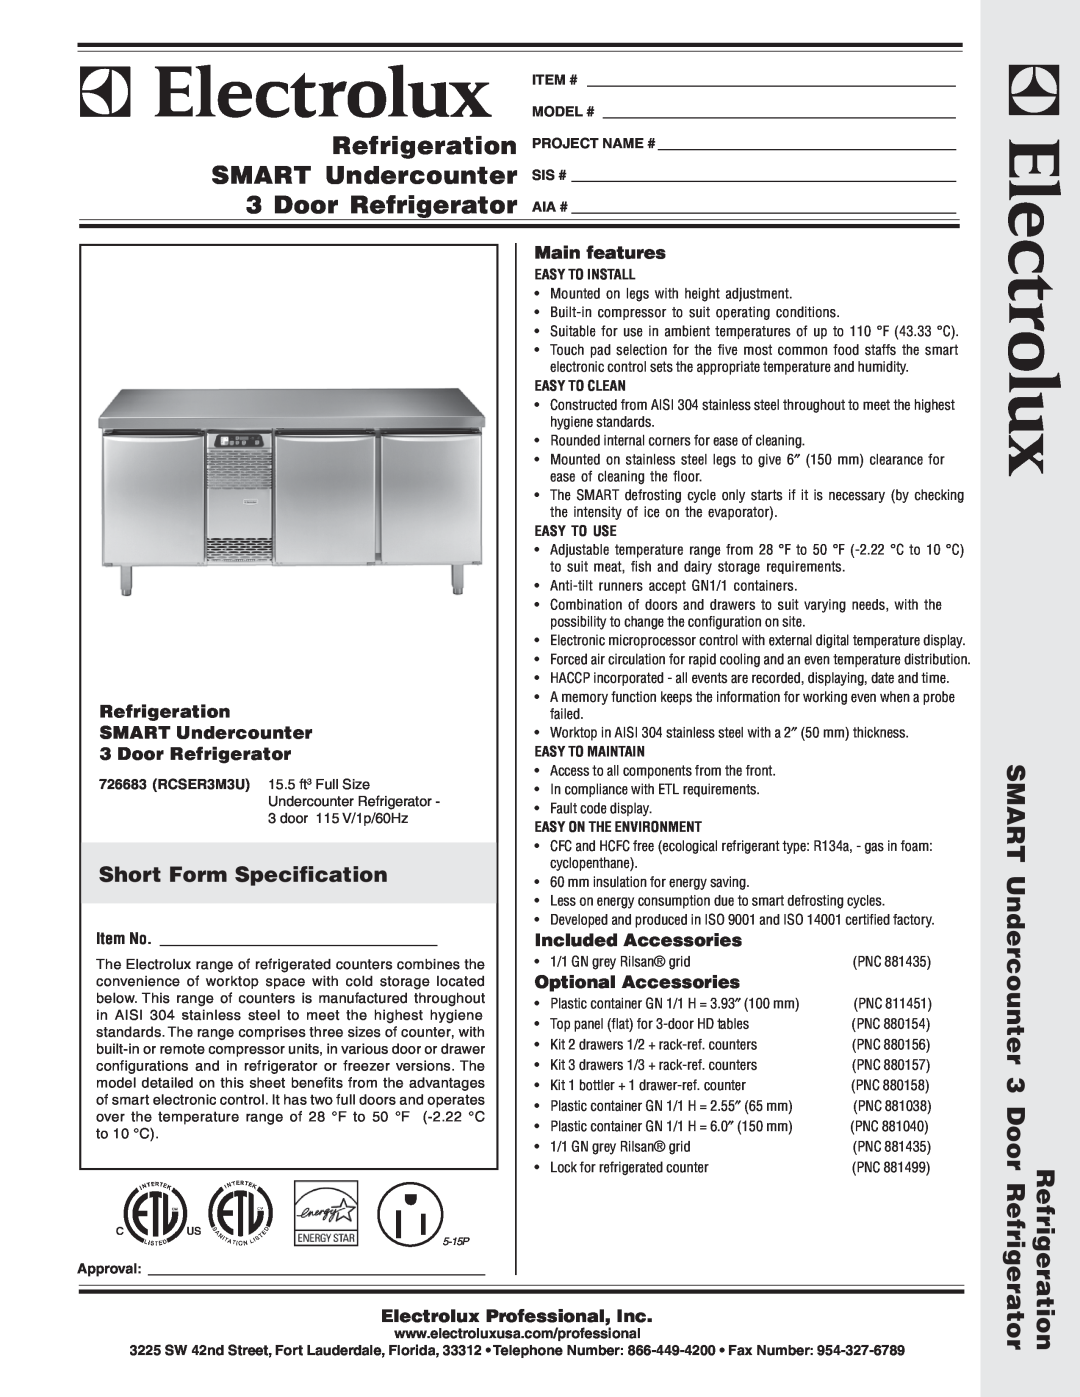 Electrolux RCSER3M3U manual Short Form Specification, Main features, Refrigeration, SMART Undercounter, Door Refrigerator 